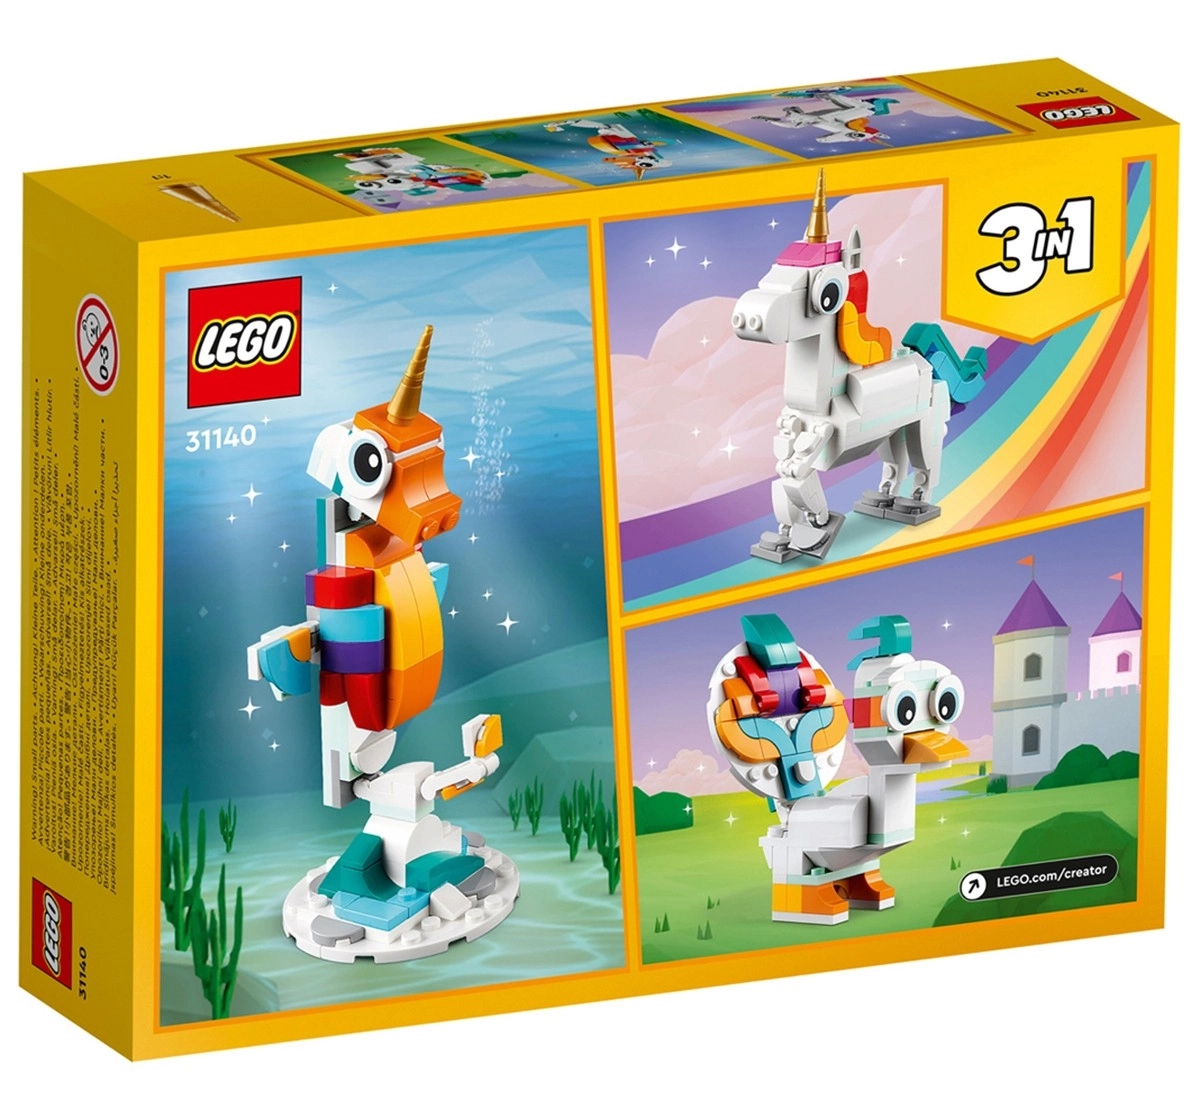 LEGO Creator Magical Unicorn, Magical Unicorn Building Set, 7Yrs+